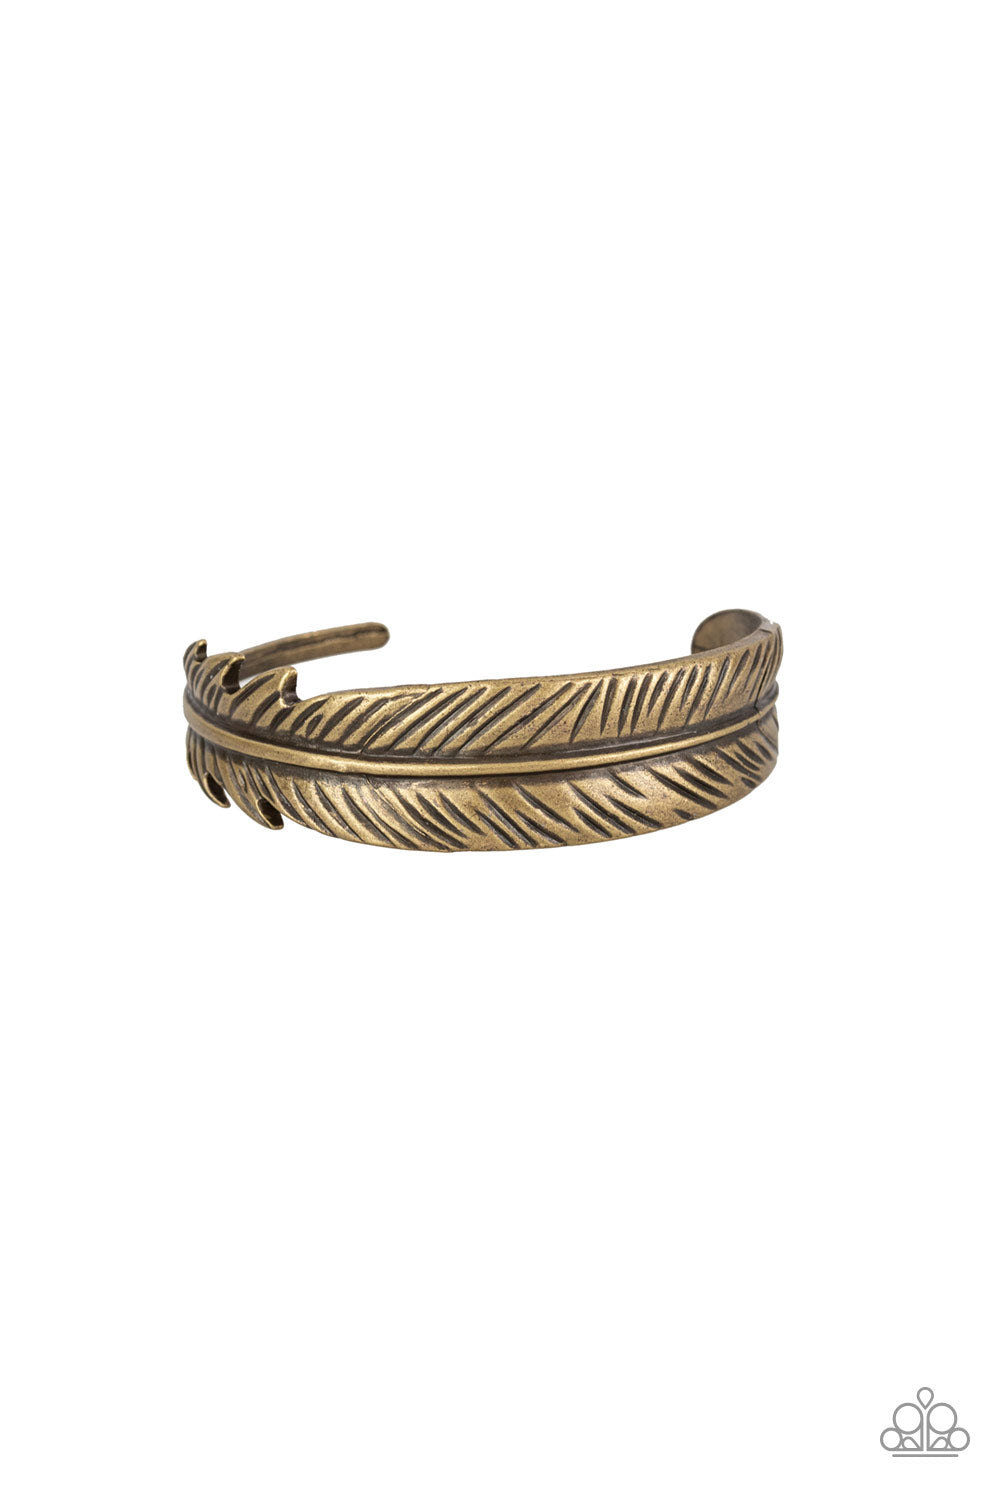 Tran-QUILL-ity - Brass Bracelet